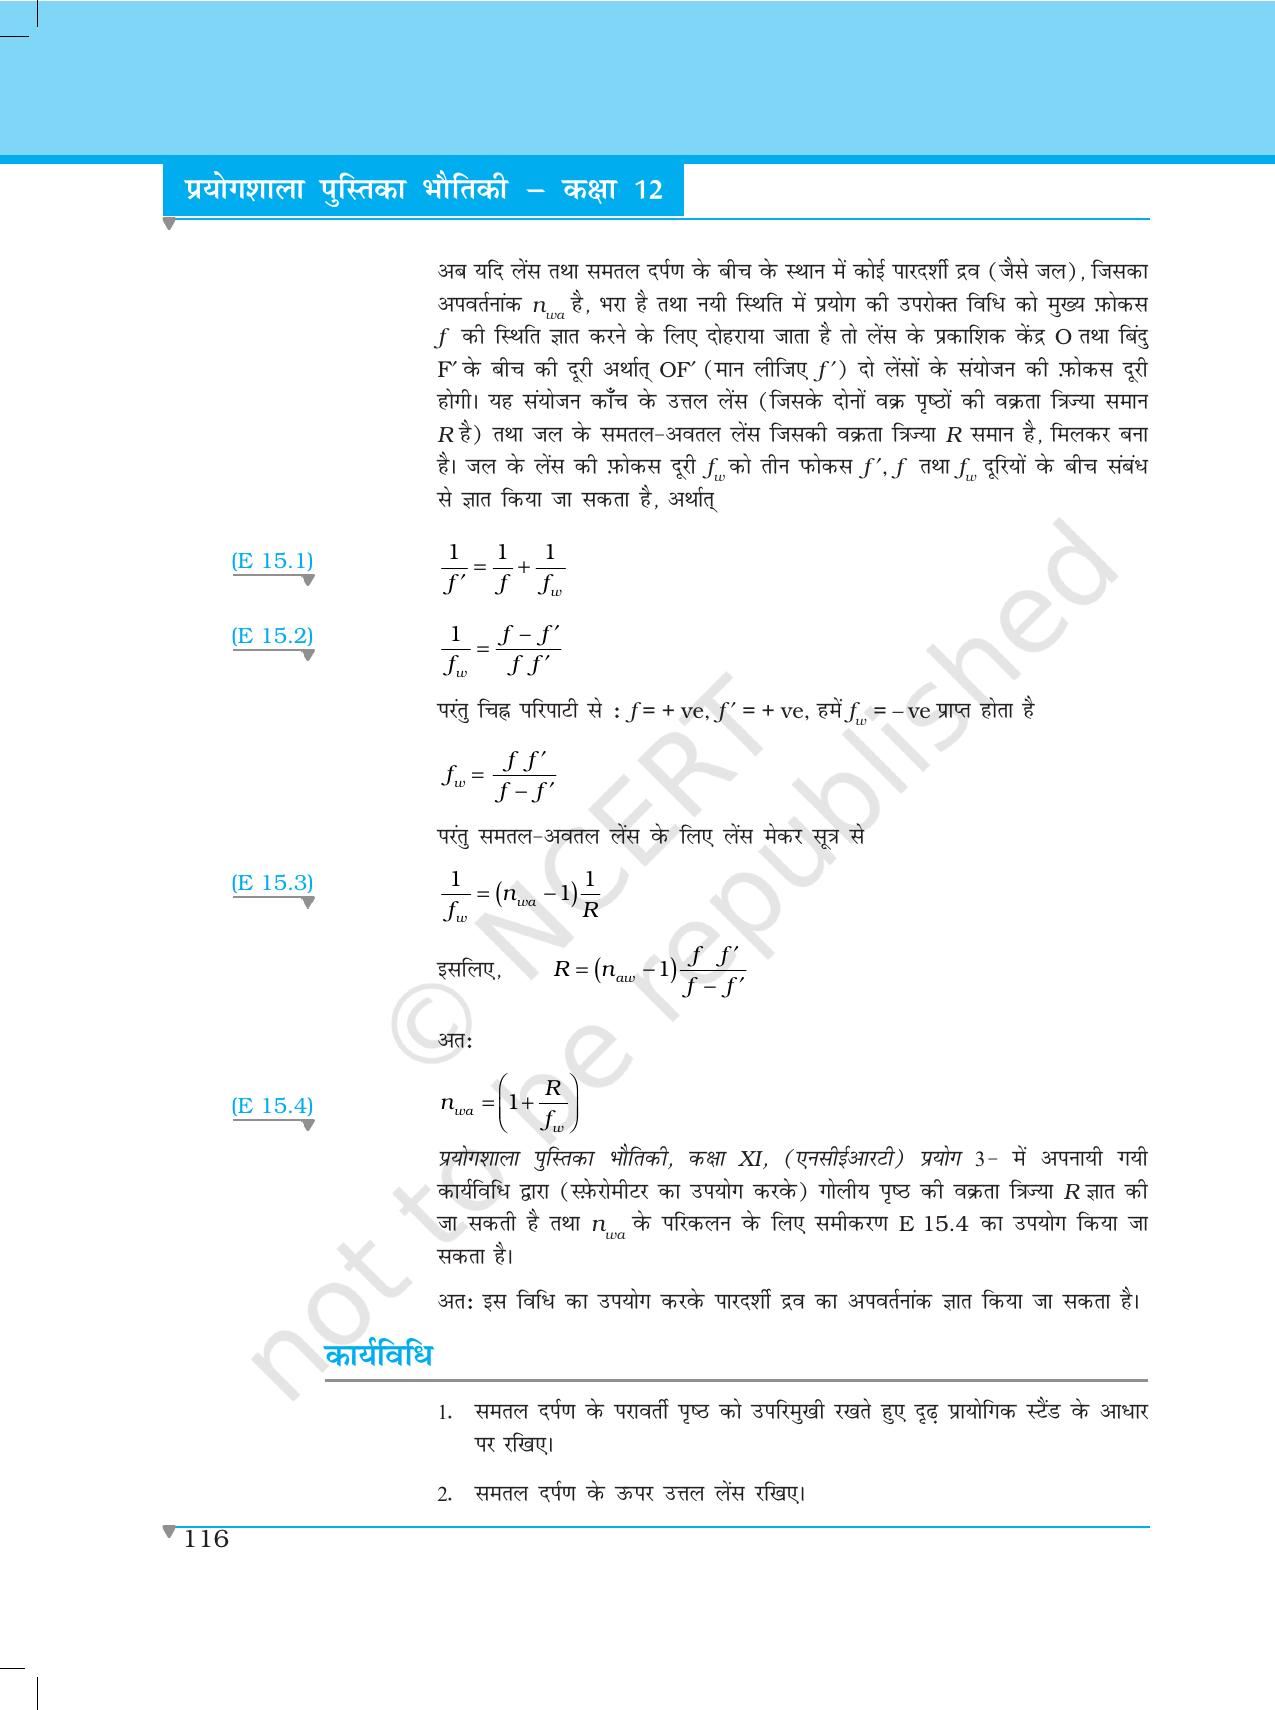 NCERT Laboratory Manuals for Class XII भौतिकी - प्रयोग (14 - 18) - Page 12